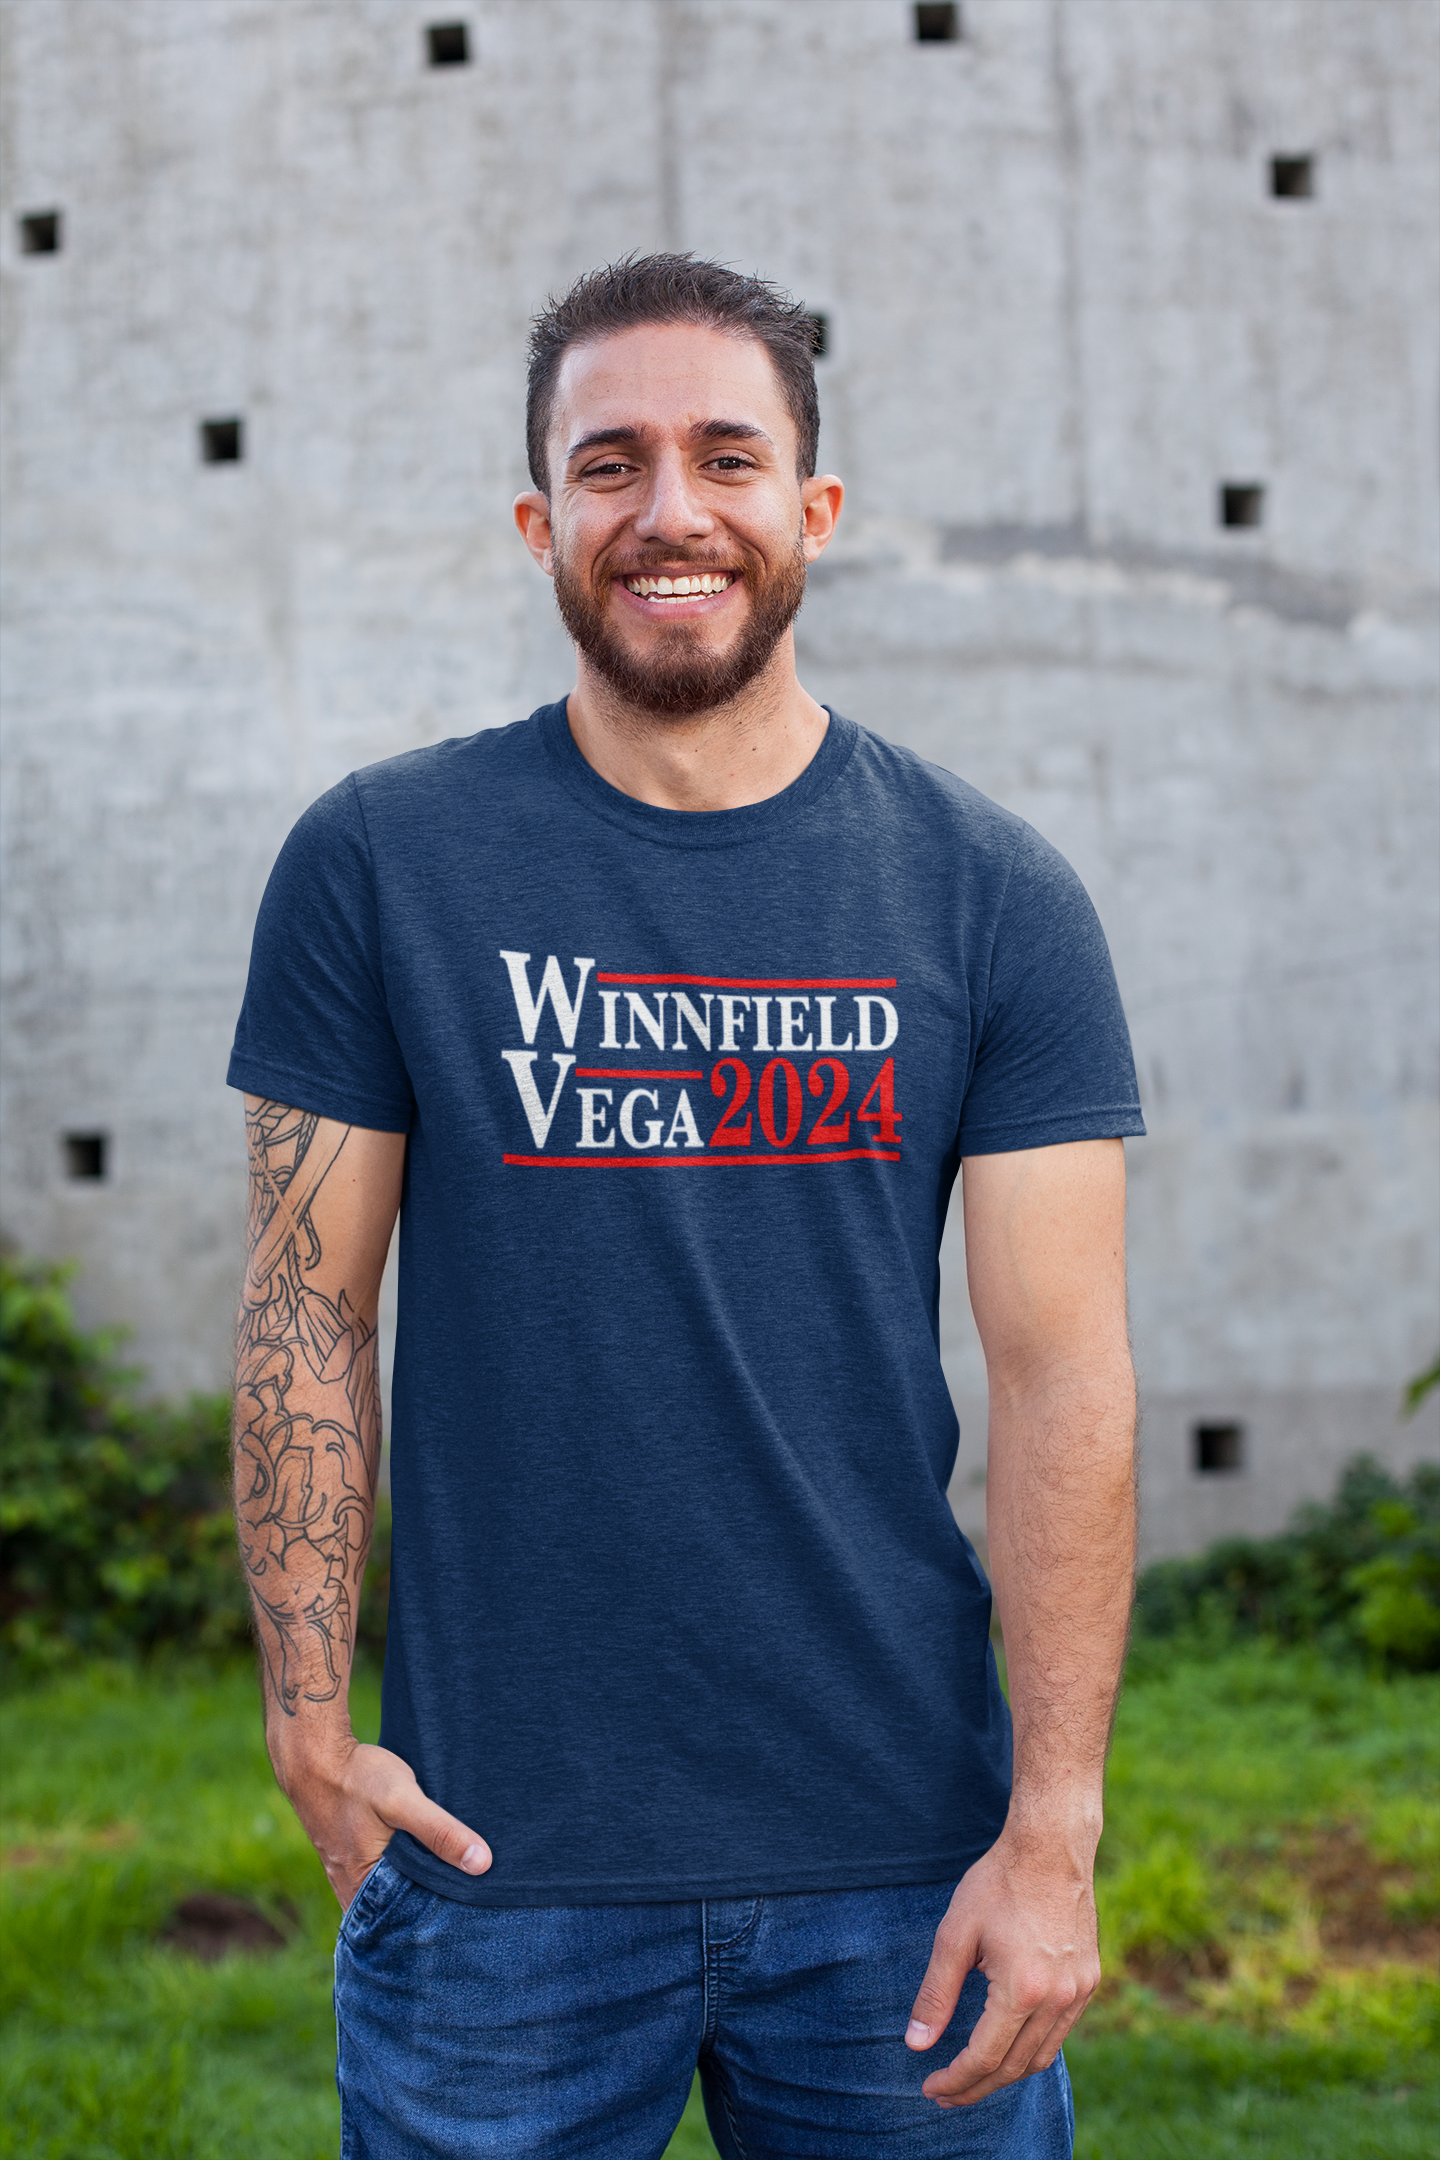 Winnfield Vega 2024 Election Tshirt - Donkey Tees